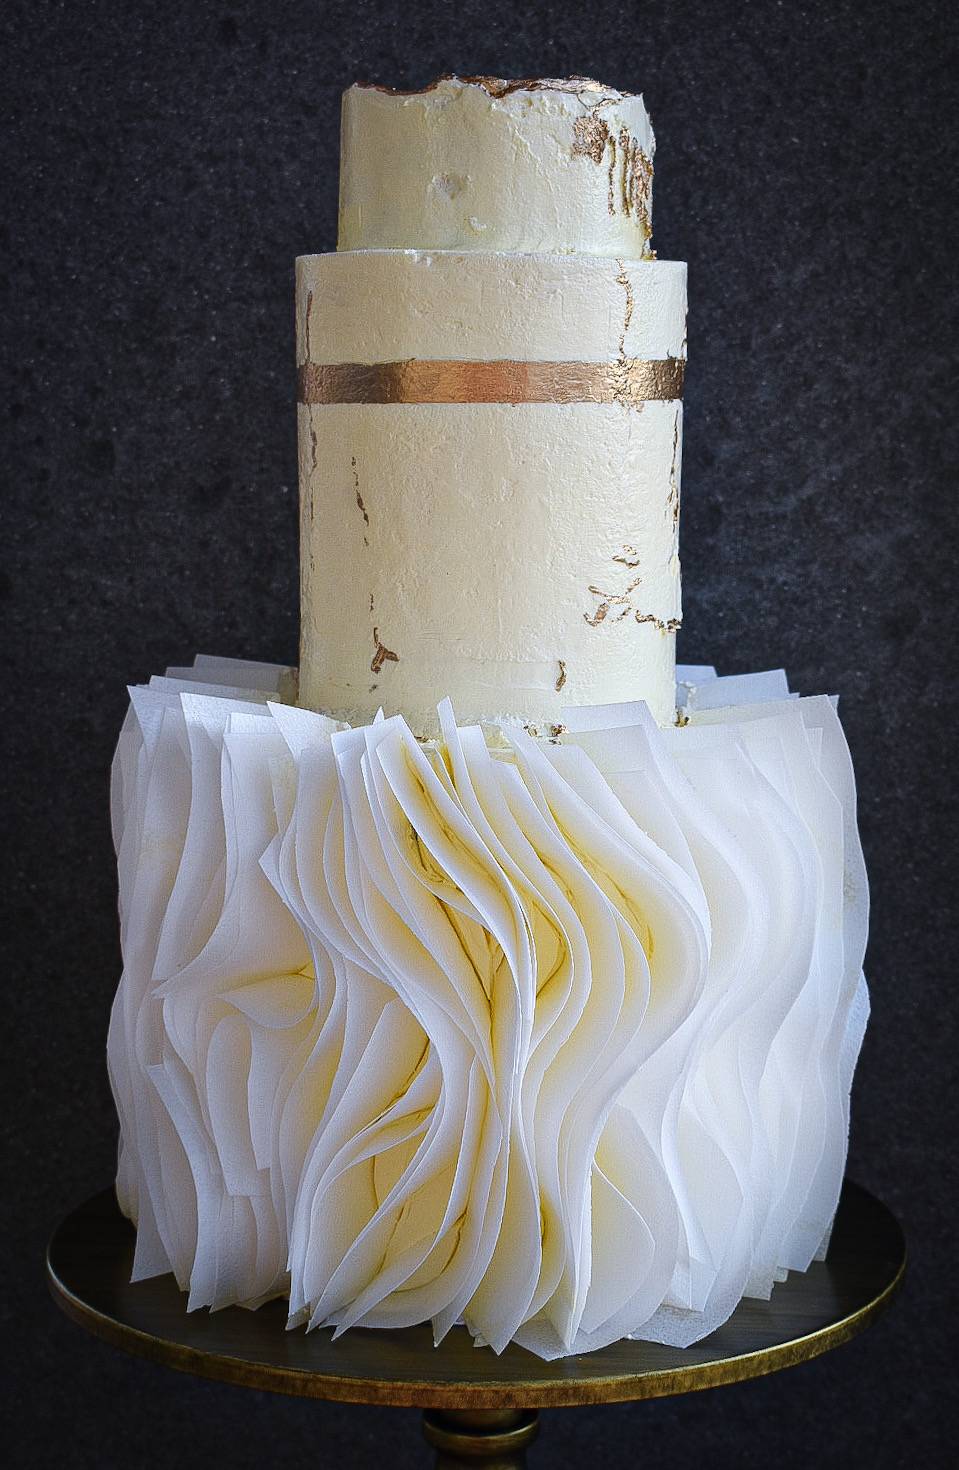 Three tier white wedding cake with gold leaf decor